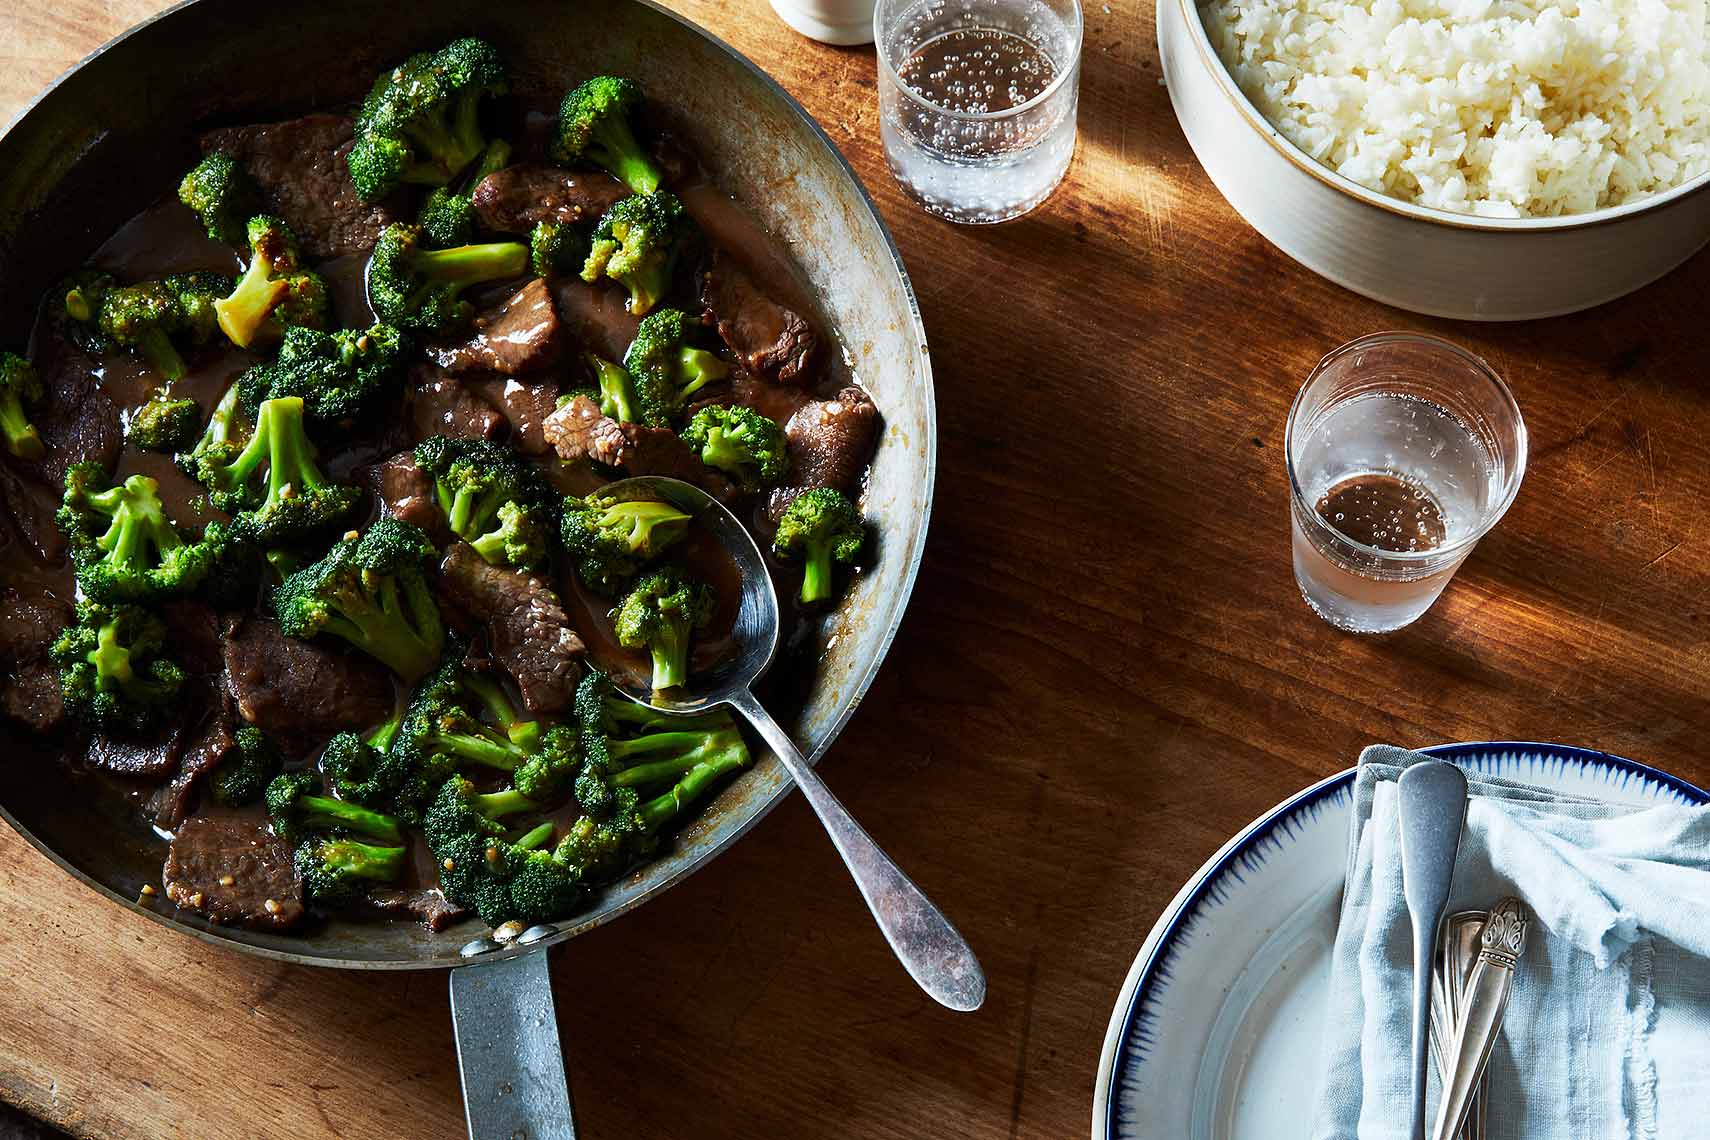 beef and broccoli stir fry